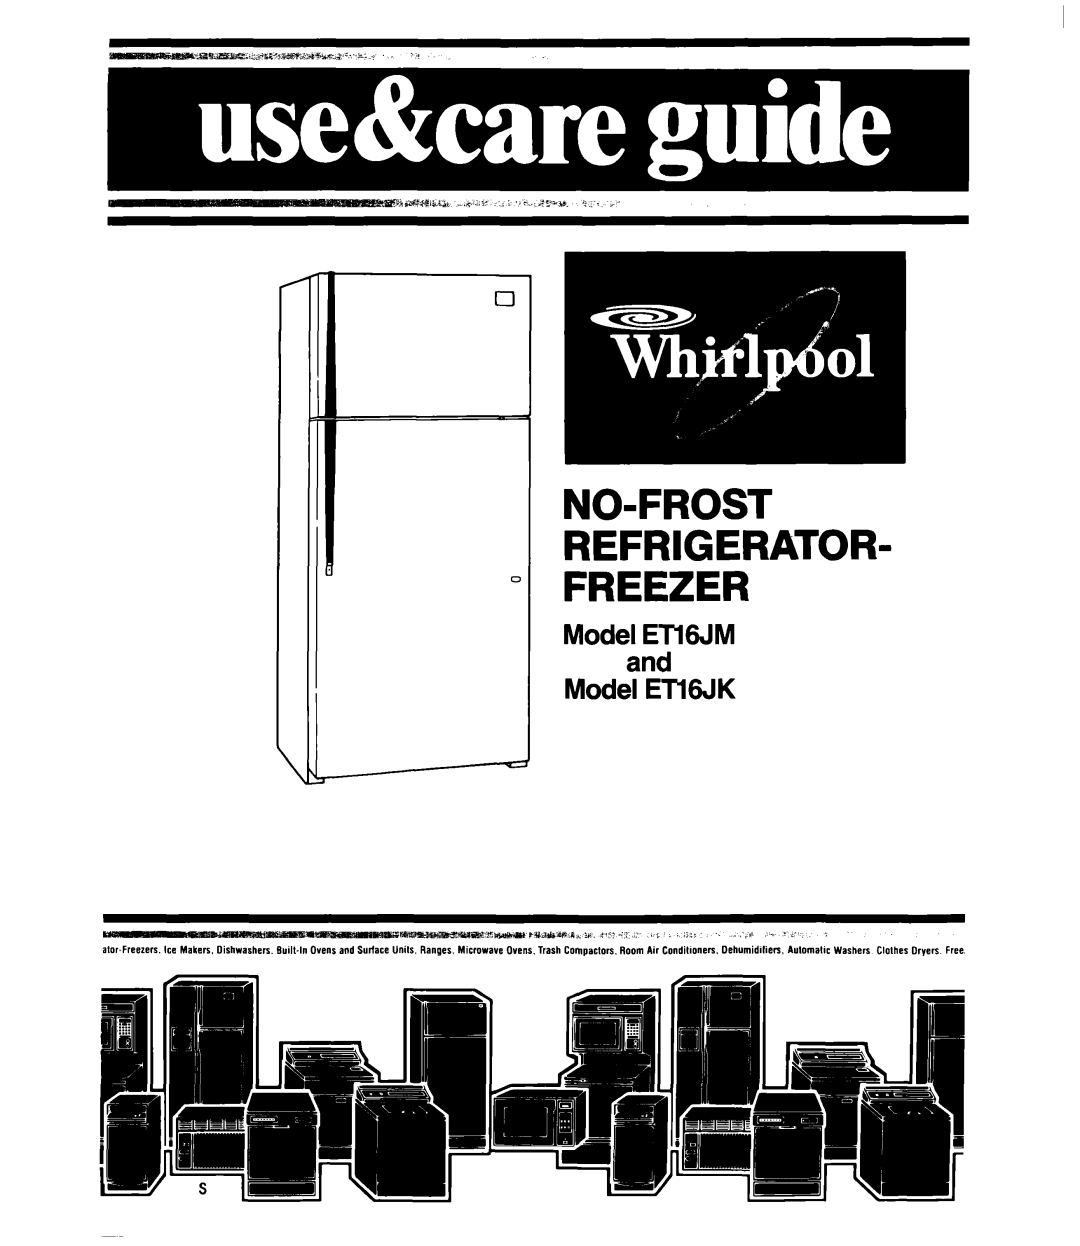 Whirlpool manual Model ETl6JM and Model ETl6JK, No-Frost Refrigerator Freezer, alor-Freezers, Ice Makers. Dishwashers 